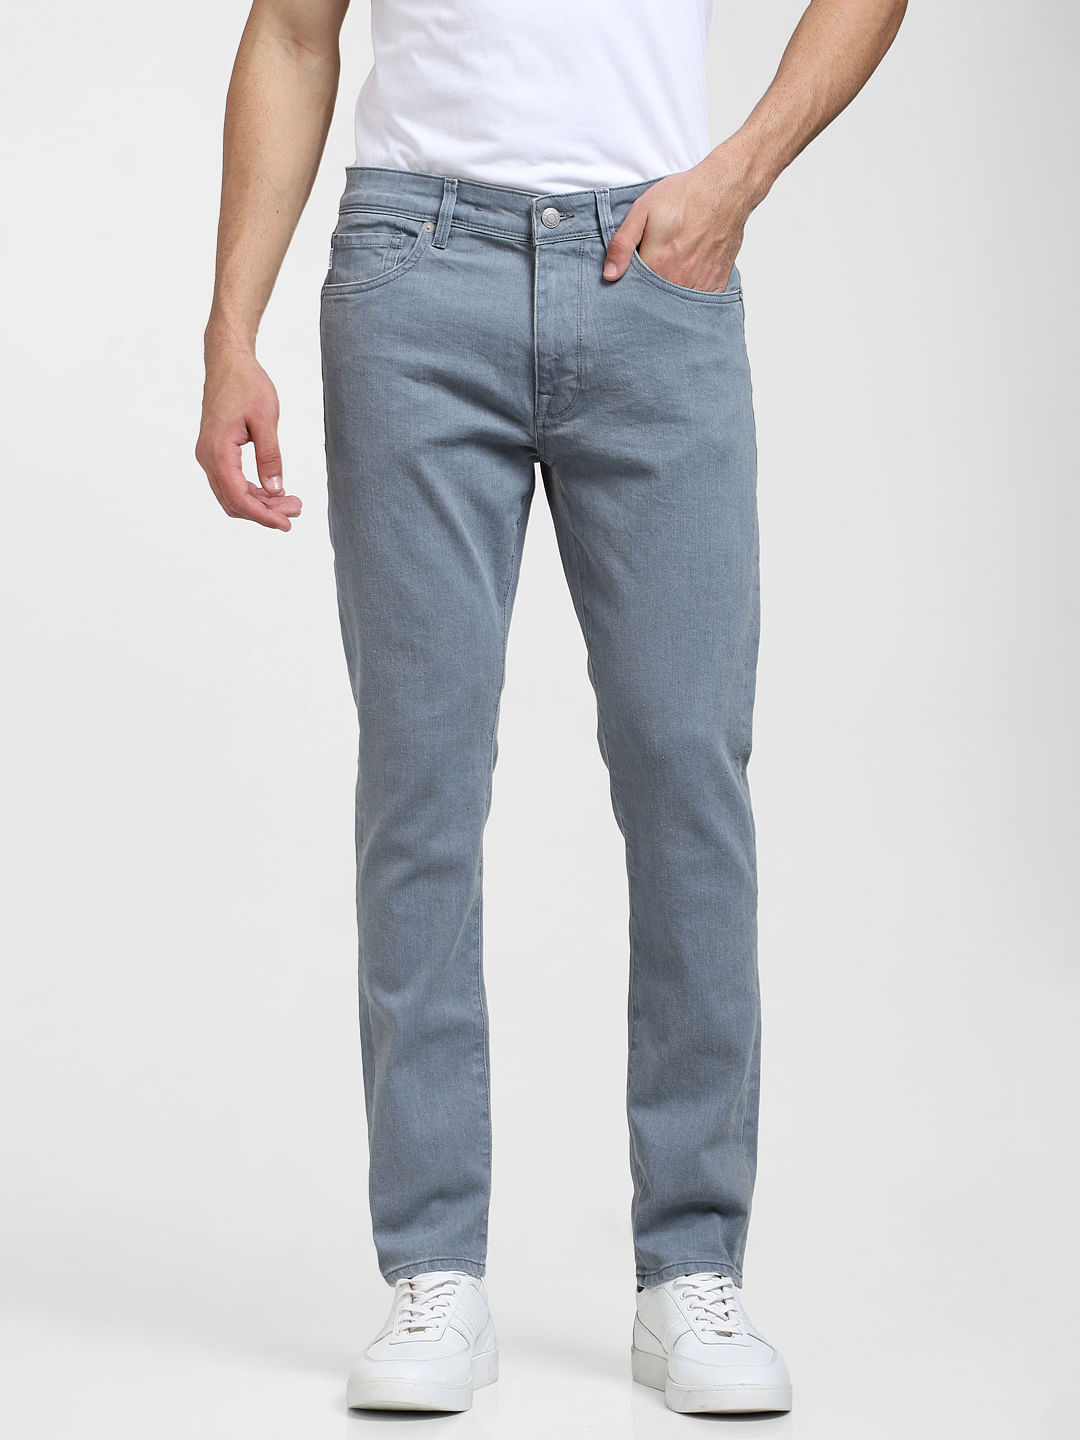 Timberland. Men Denim Jeans pants. STOCKLOT offering. Super low price offer  !! - United Arab Emirates, New - The wholesale platform | Merkandi B2B